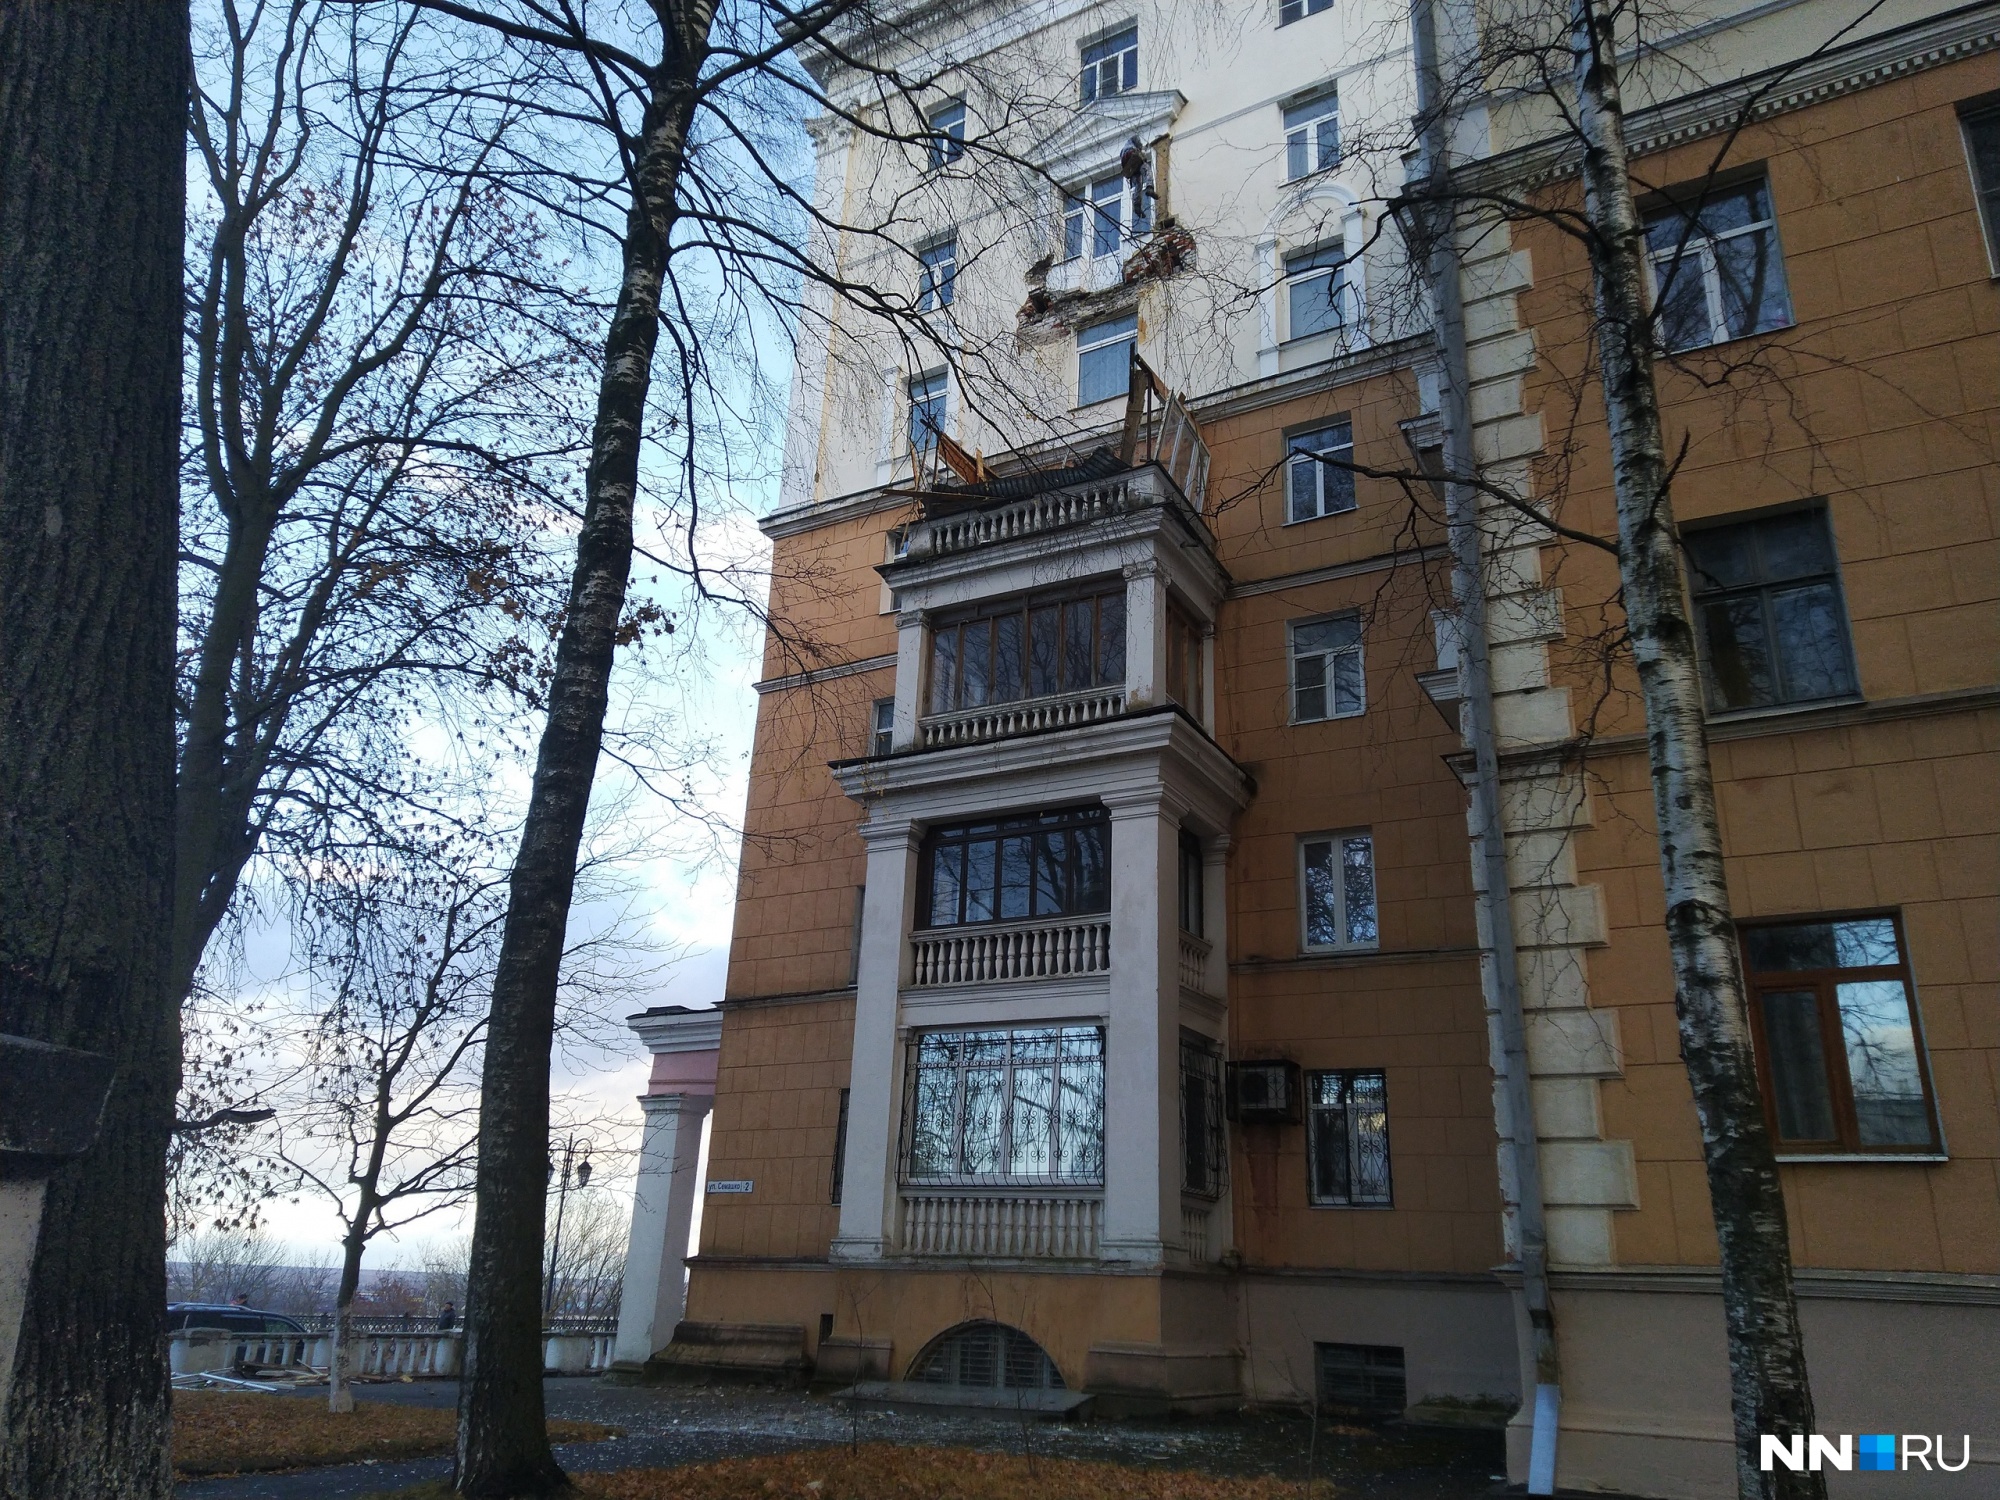 На улице Семашко обрушился балкон жилого дома